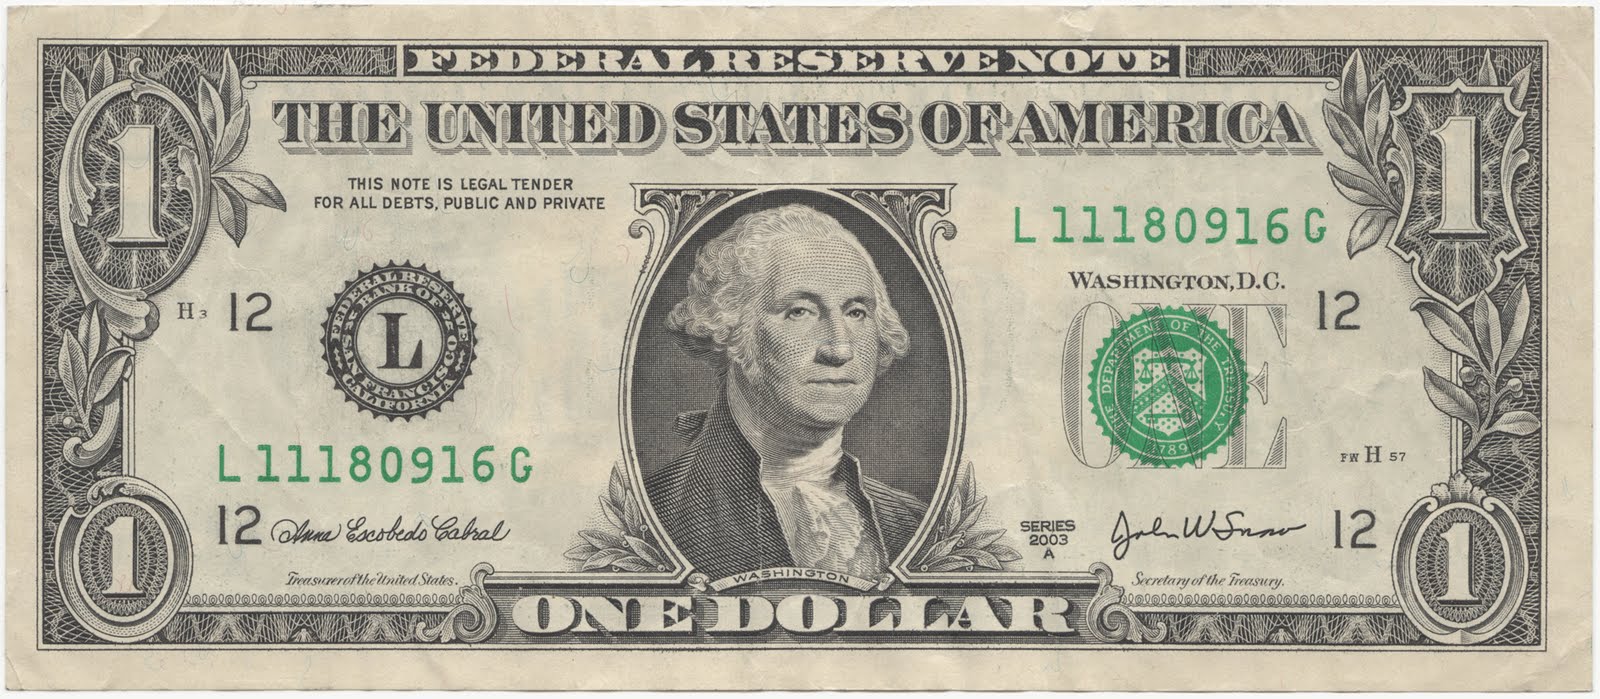 Dollar Bill Clip Art Dollar ... Image Image Image Image Image.